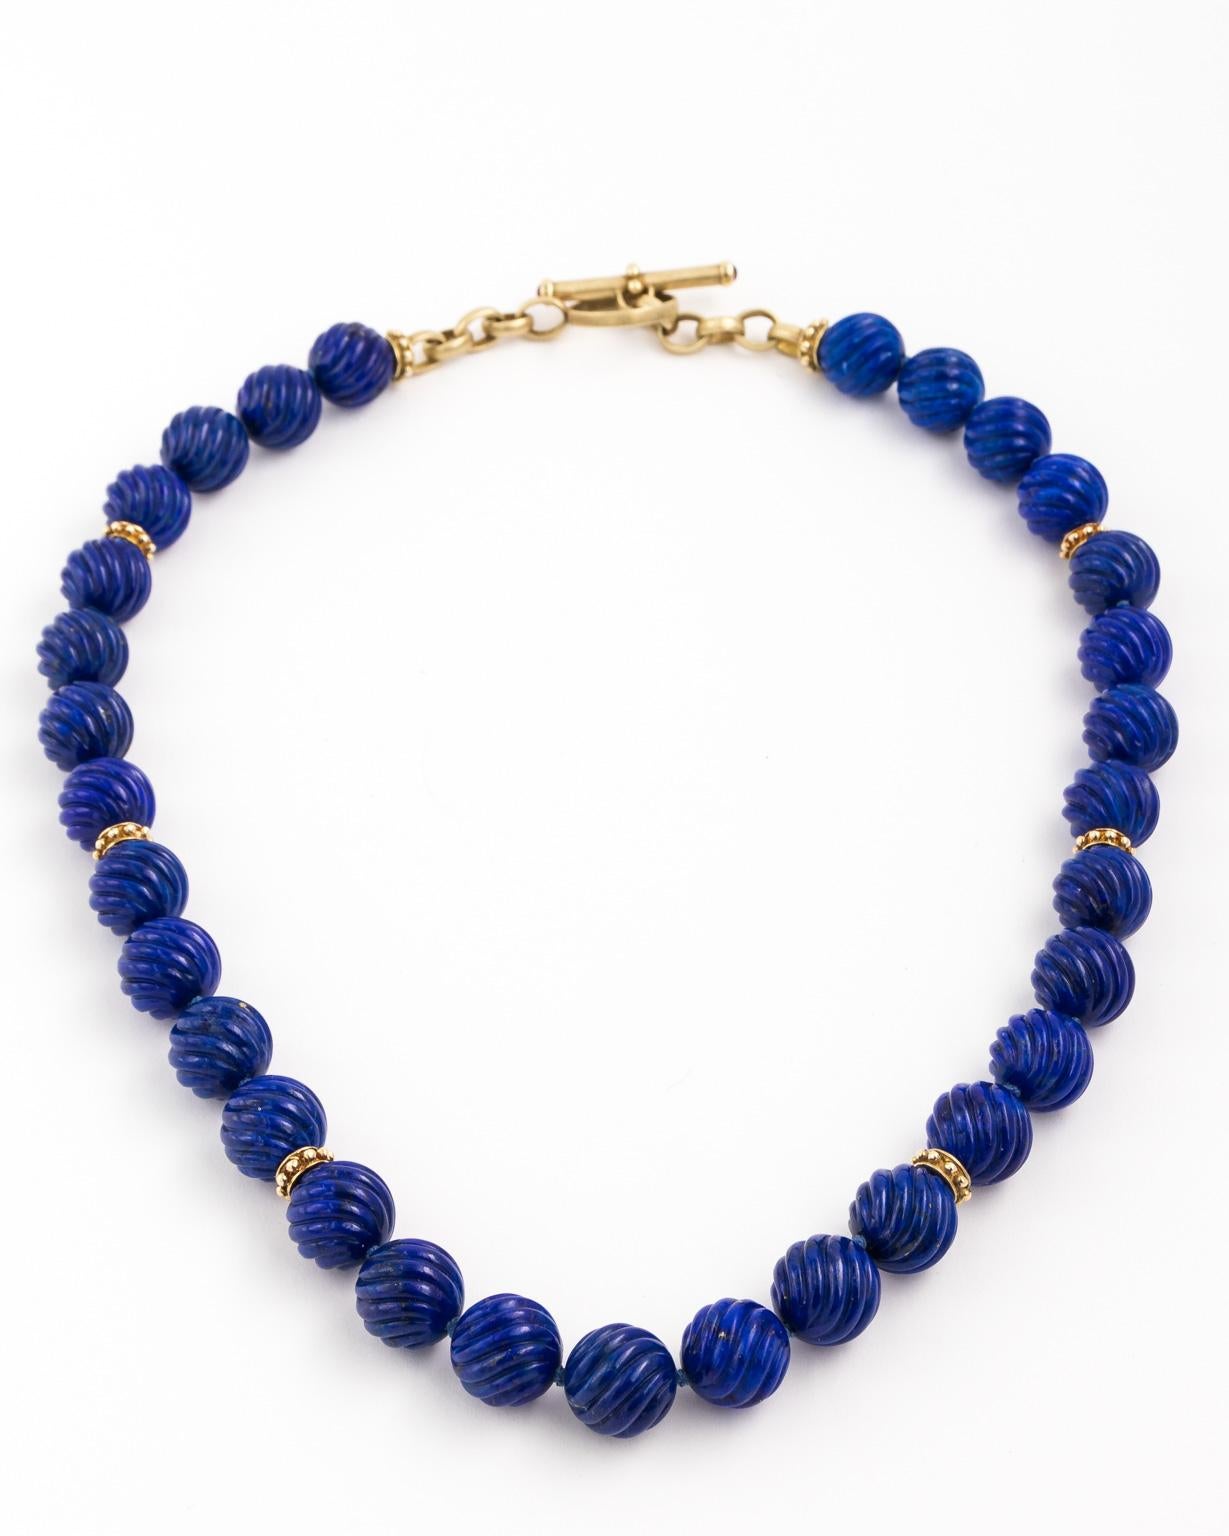 Carved Lapis Lazuli Beads Designer 14 Karat Yellow Gold Toggle Necklace For Sale 1